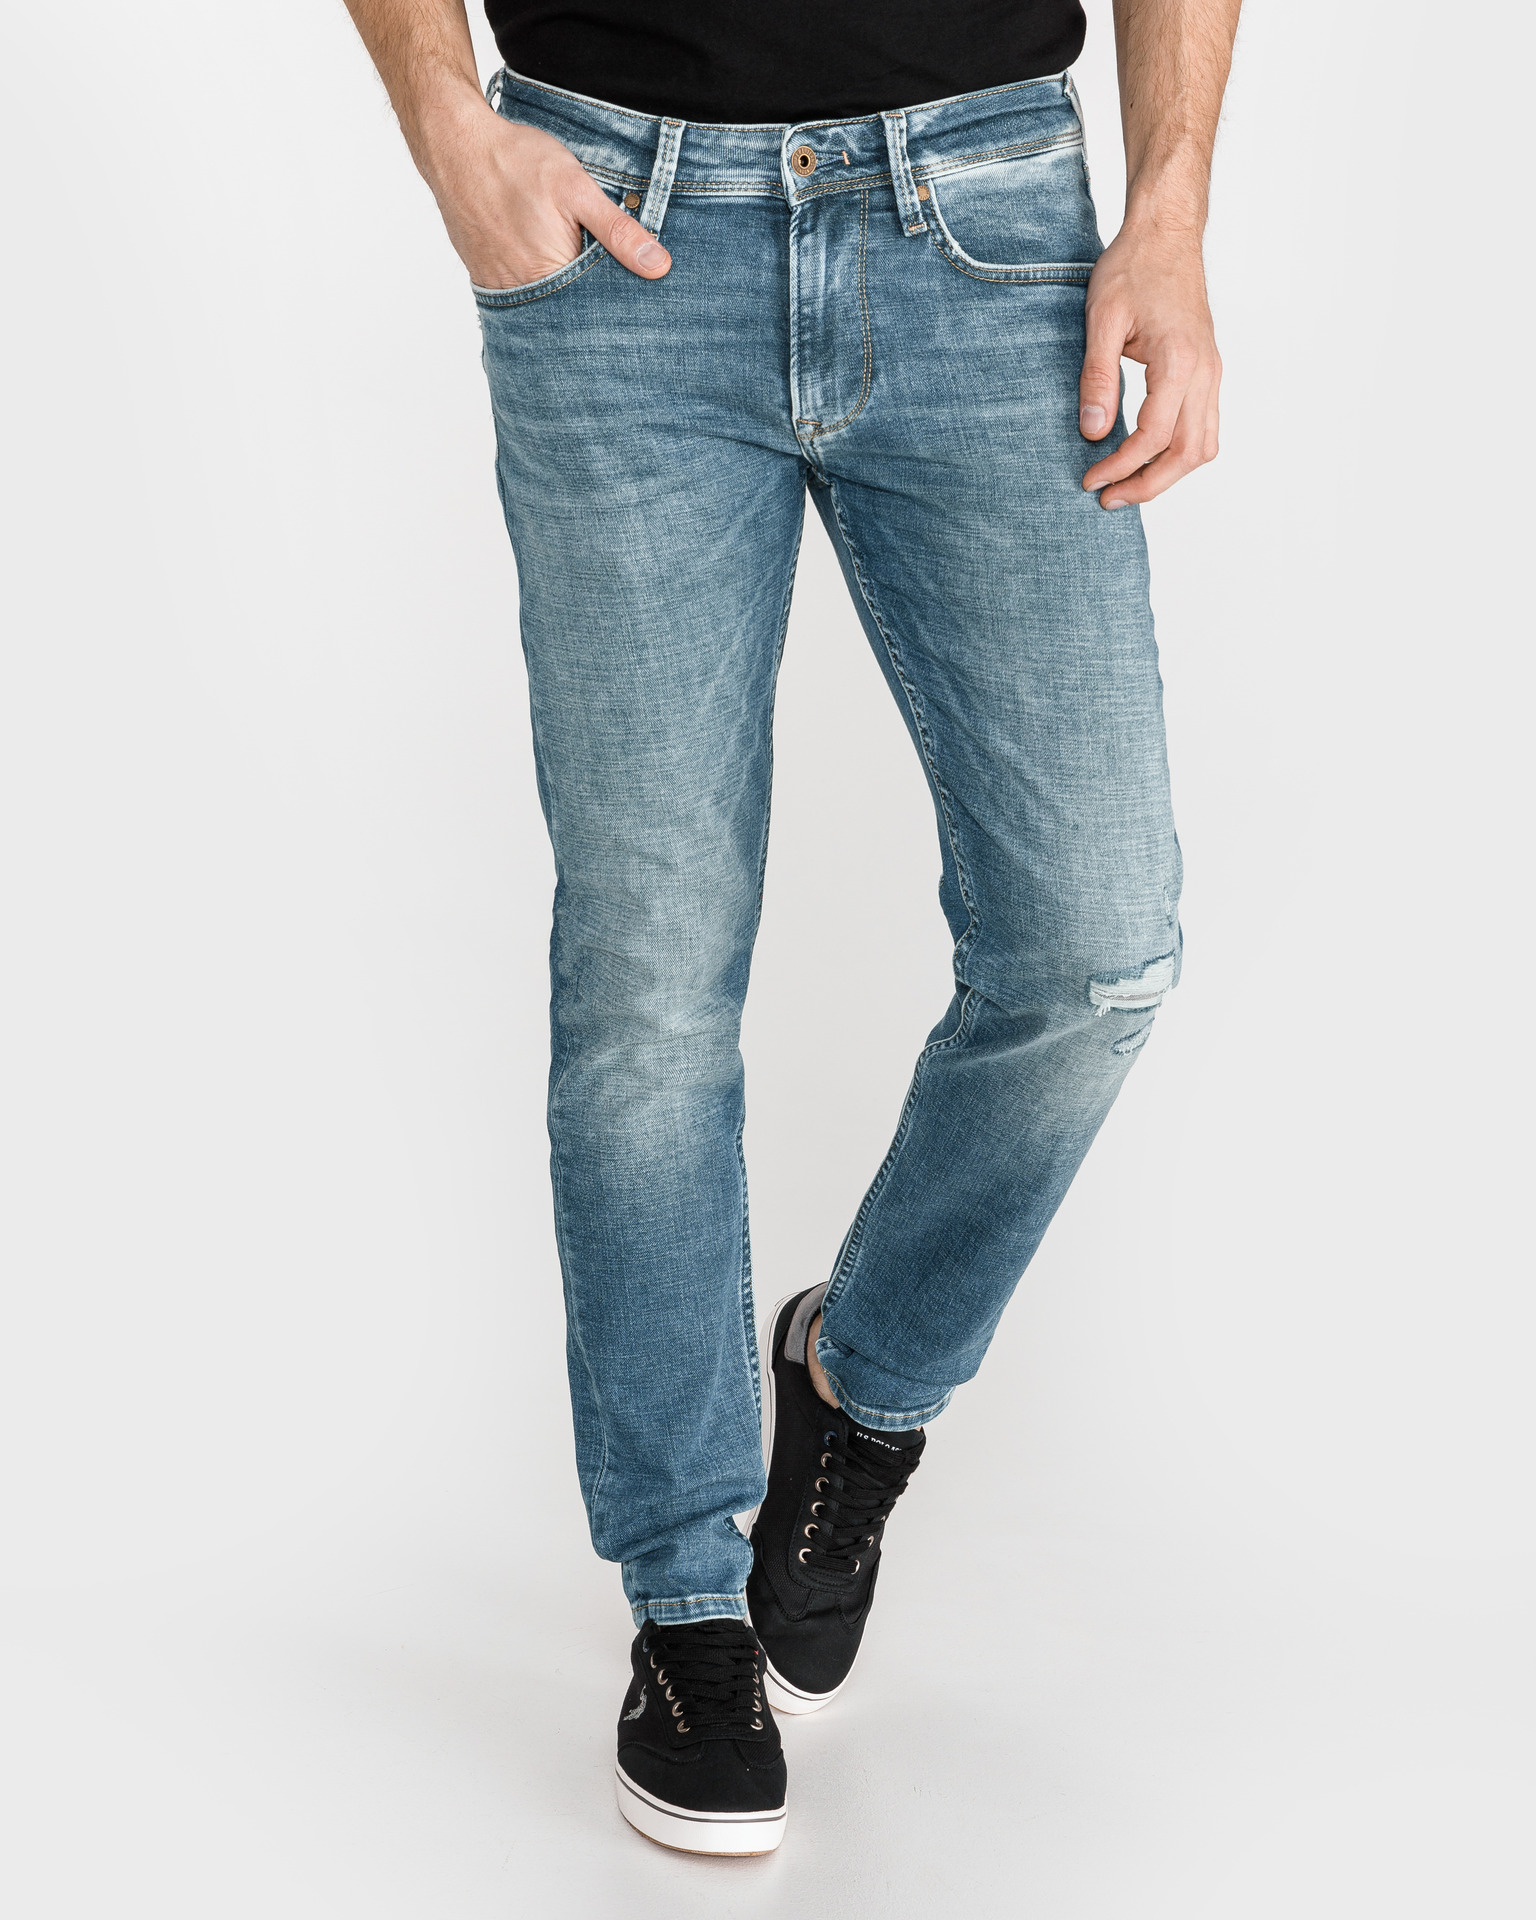 pepe jeans finsbury skinny